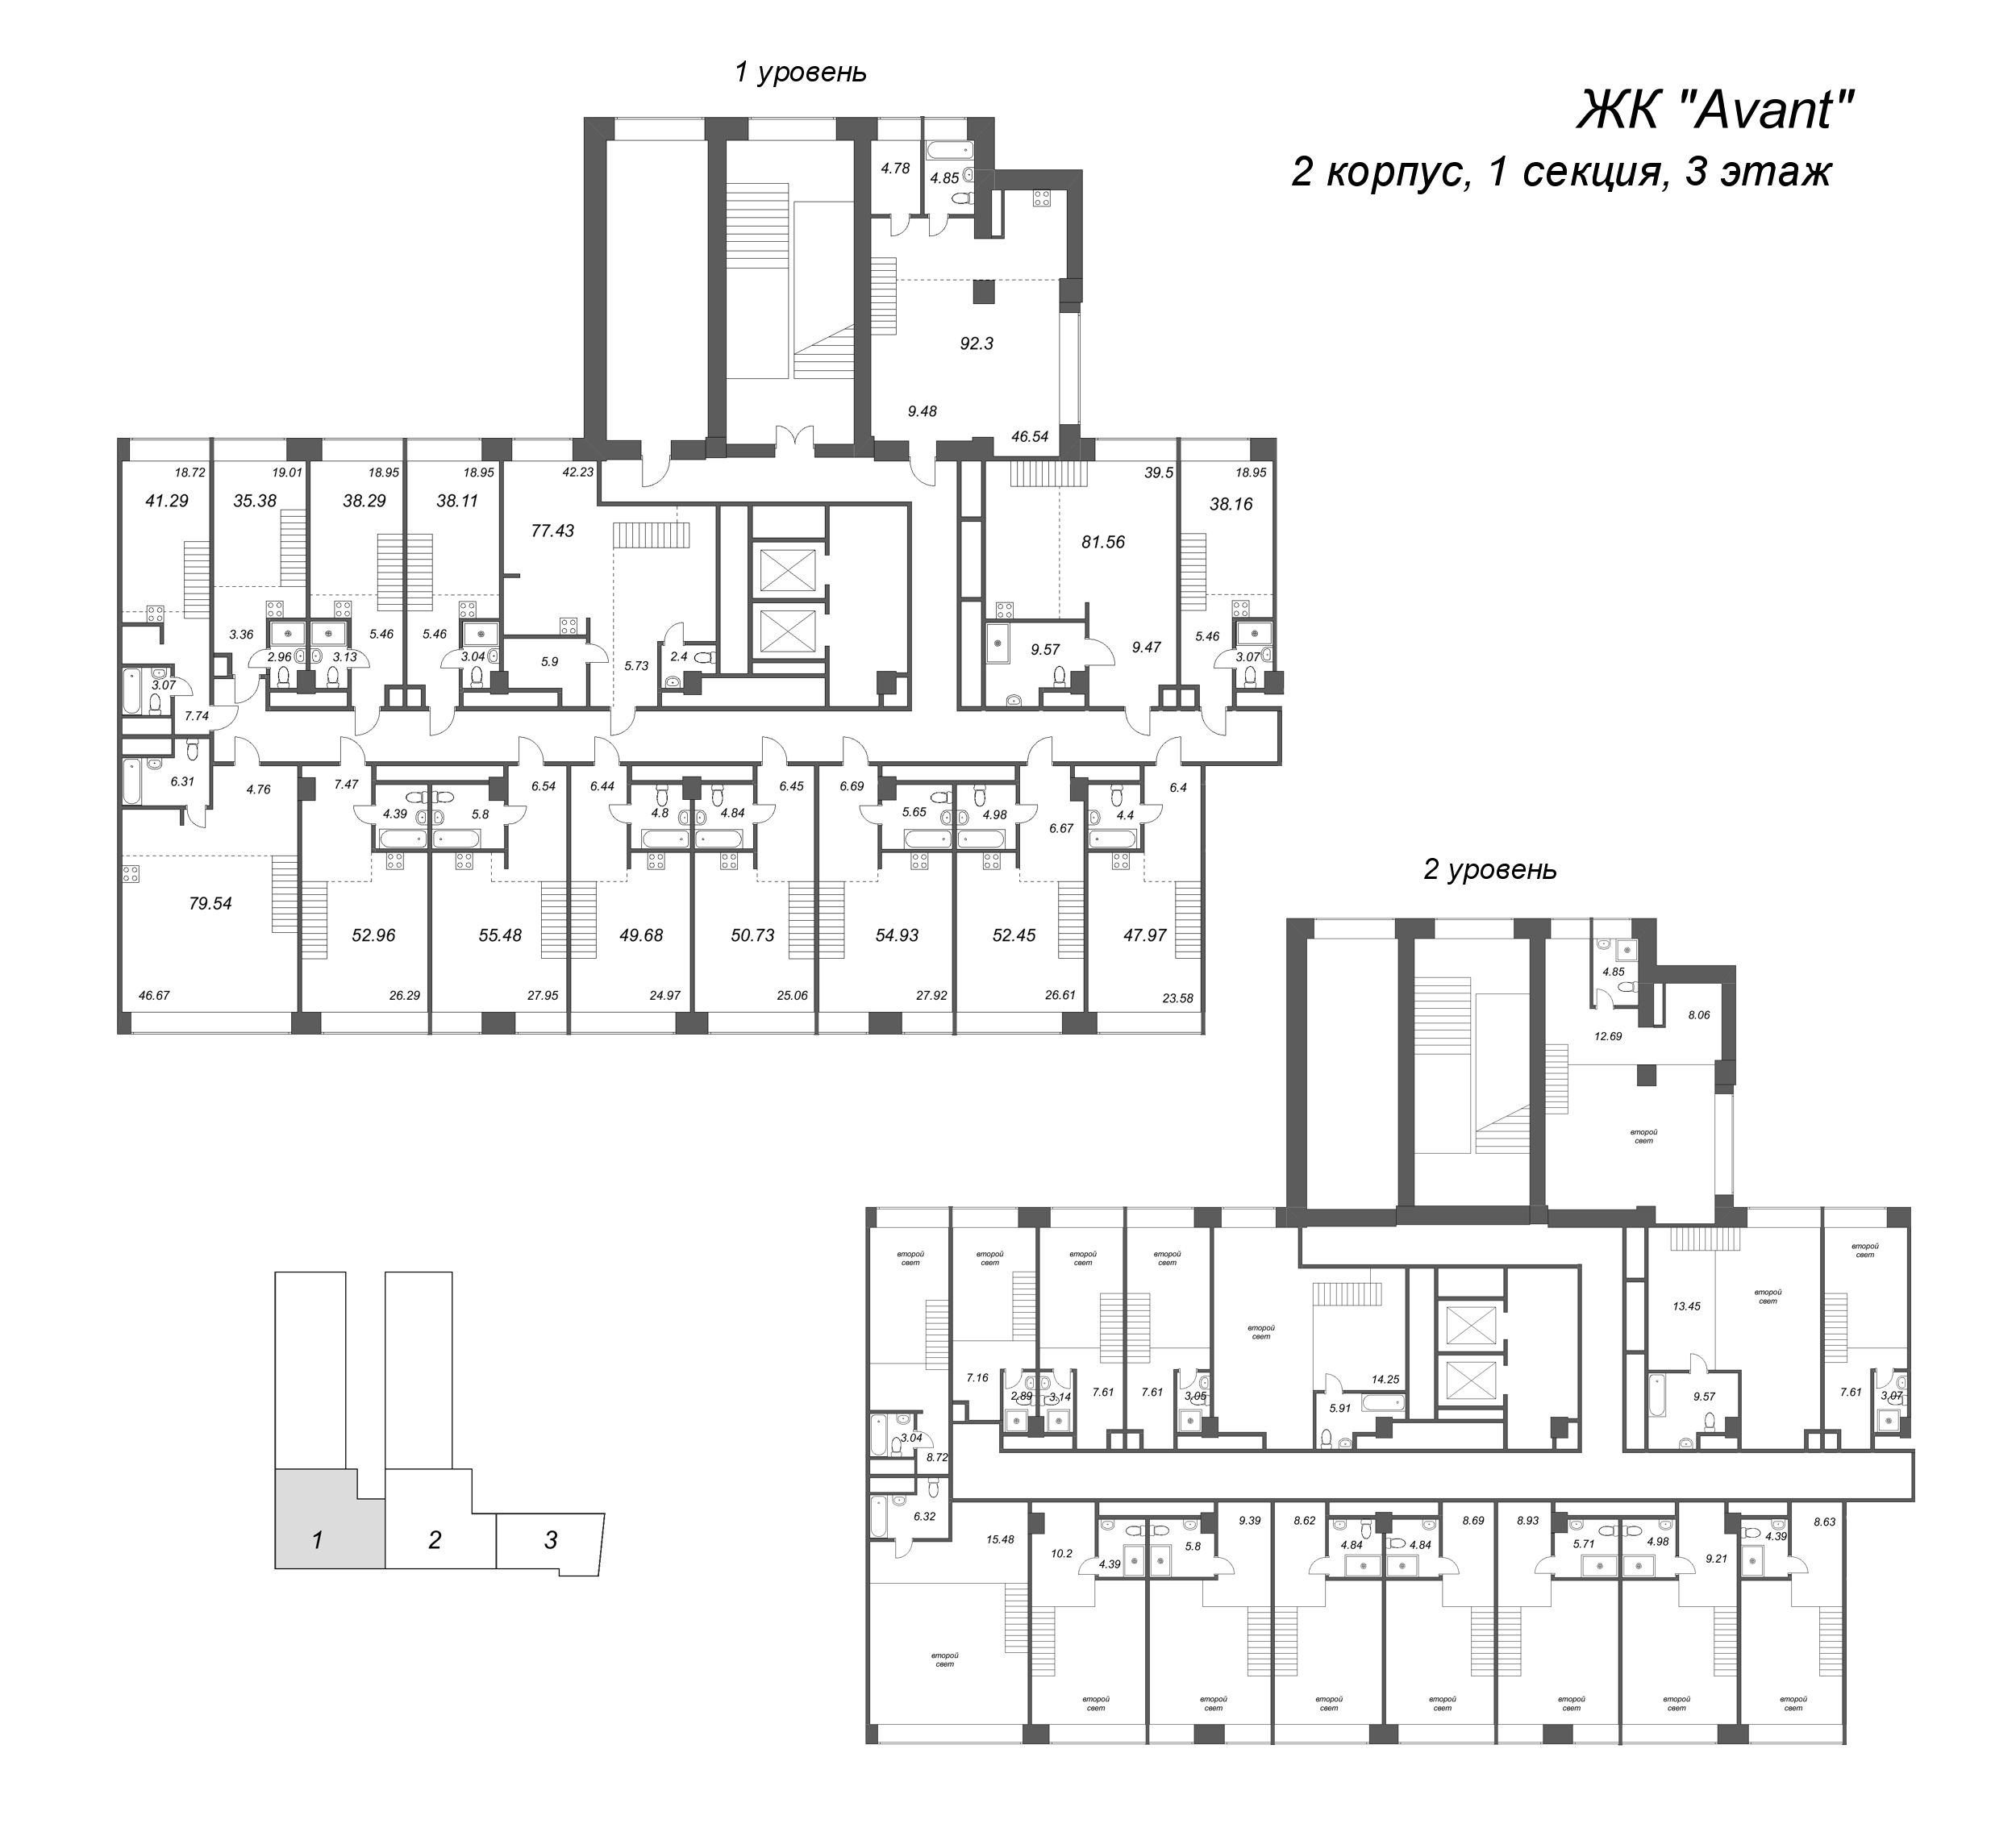 2-комнатная (Евро) квартира, 52.45 м² - планировка этажа